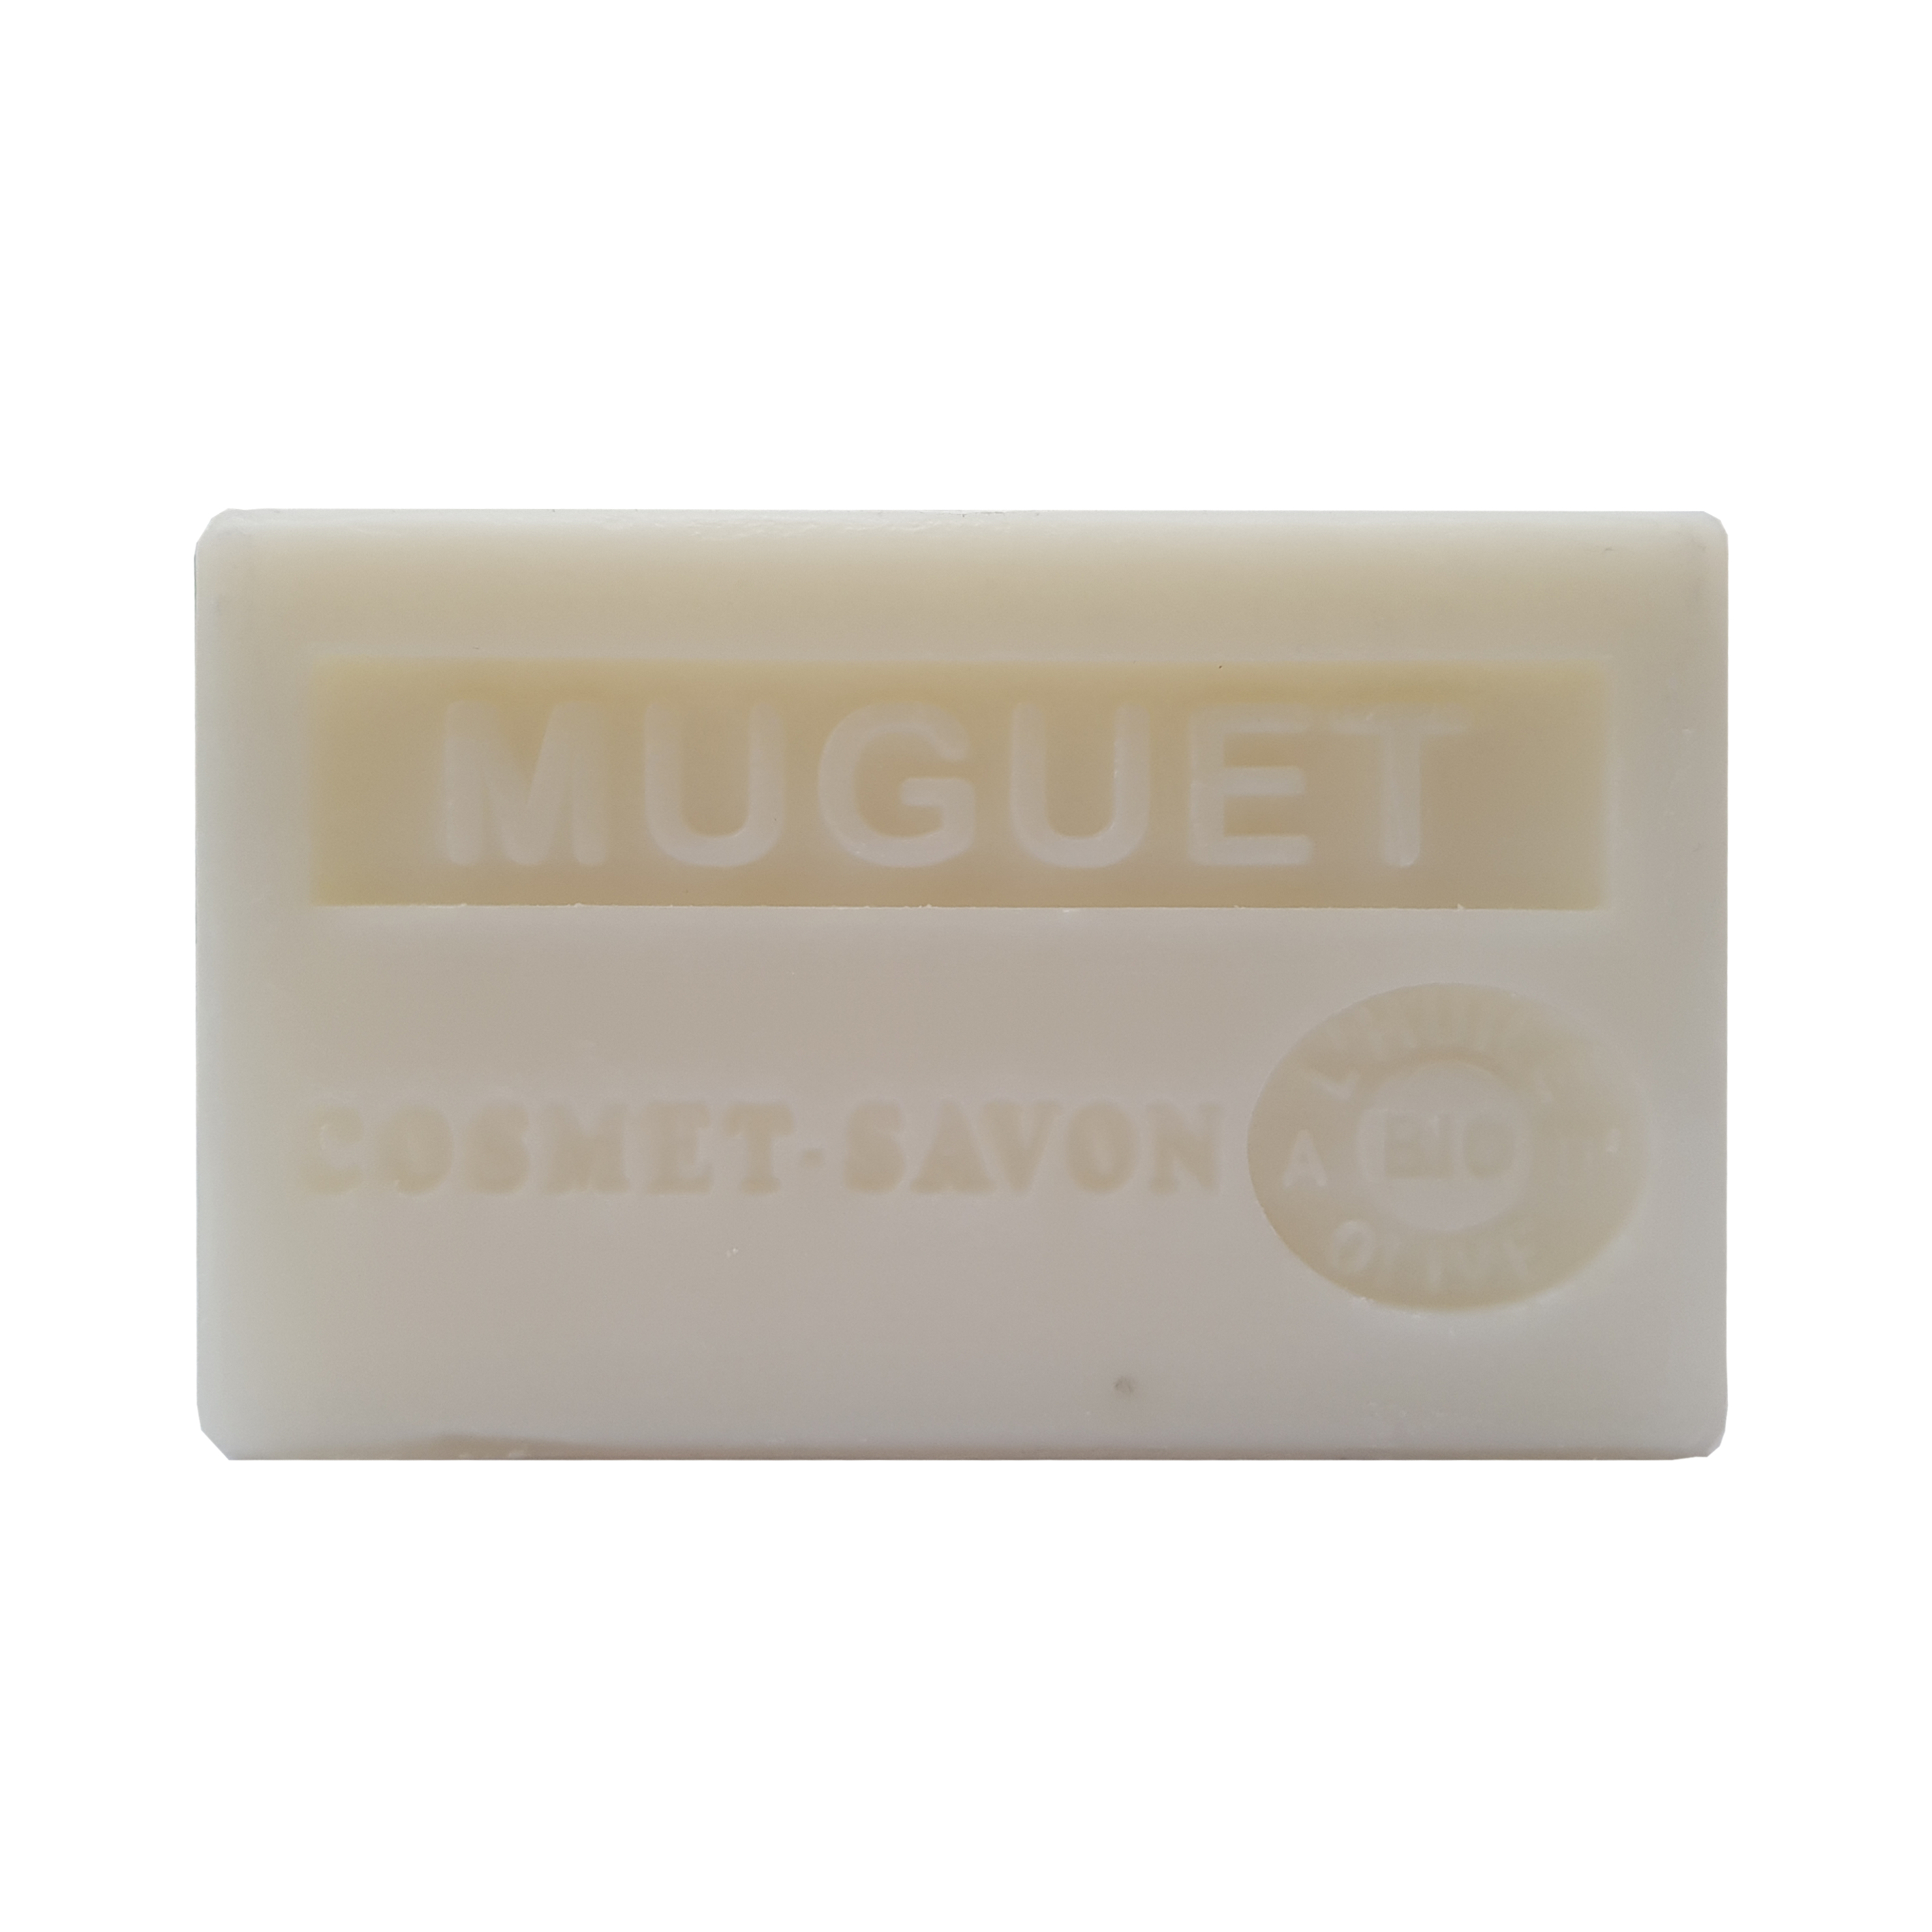 muguet-savon-125gr-au-beurre-de-karite-bio-cosmet-savon-3665205006560-face-JPEG